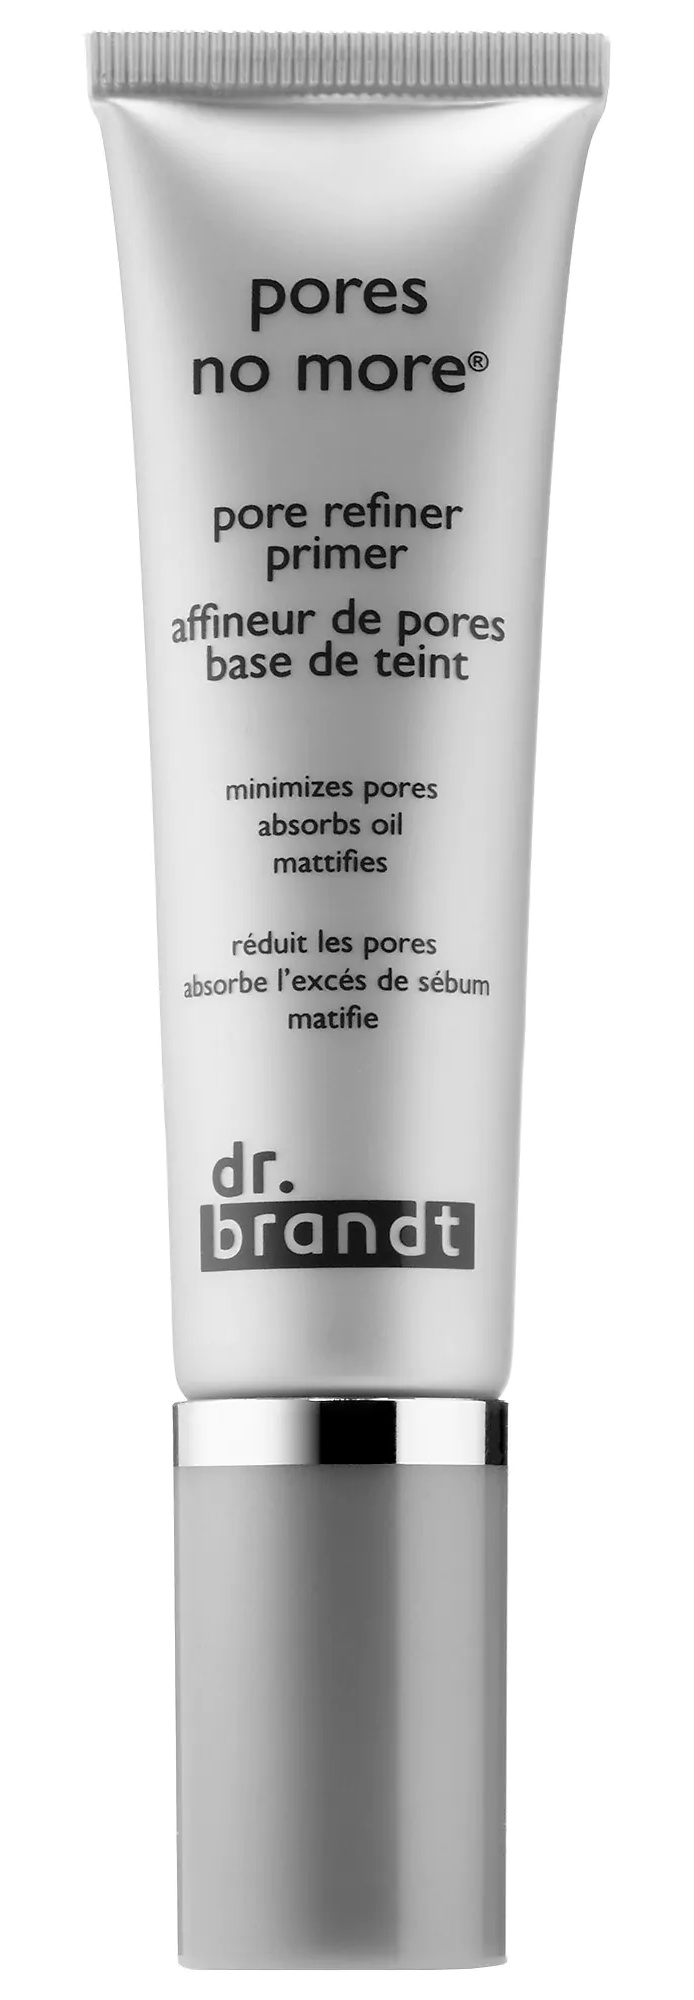 Dr. Brandt - Pores no more Pore refiner primer